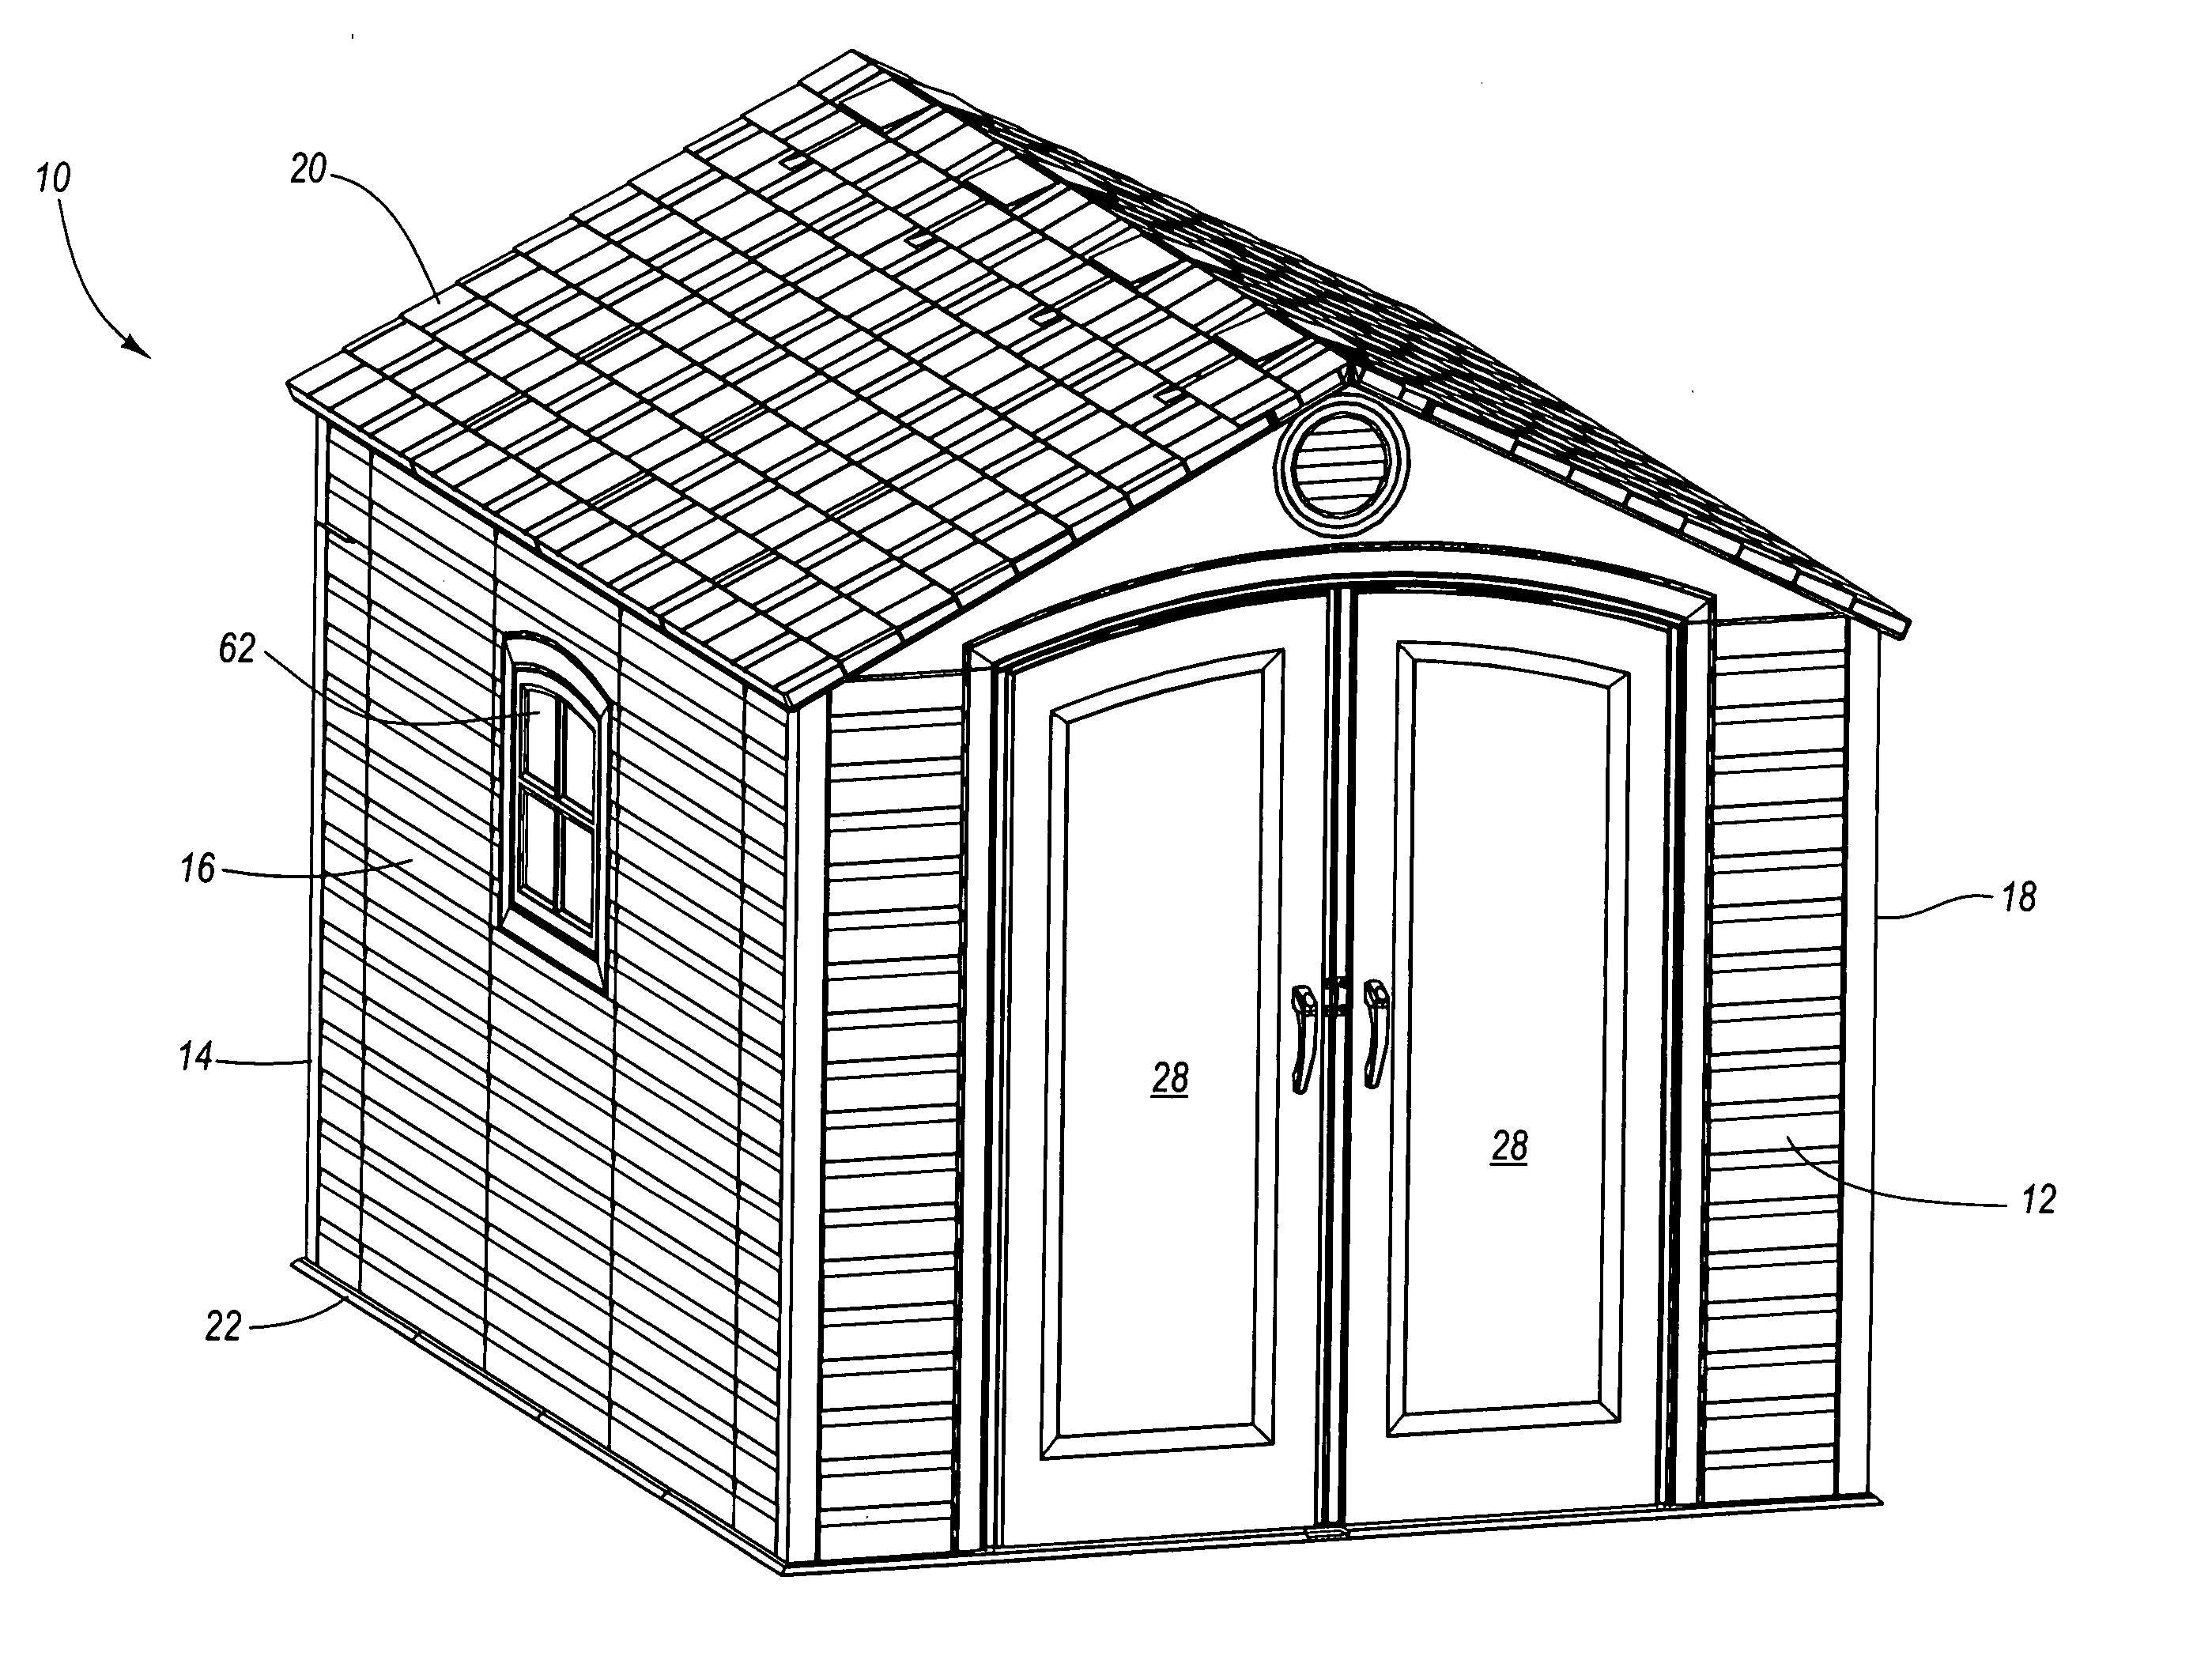 Door assembly for a modular enclosure